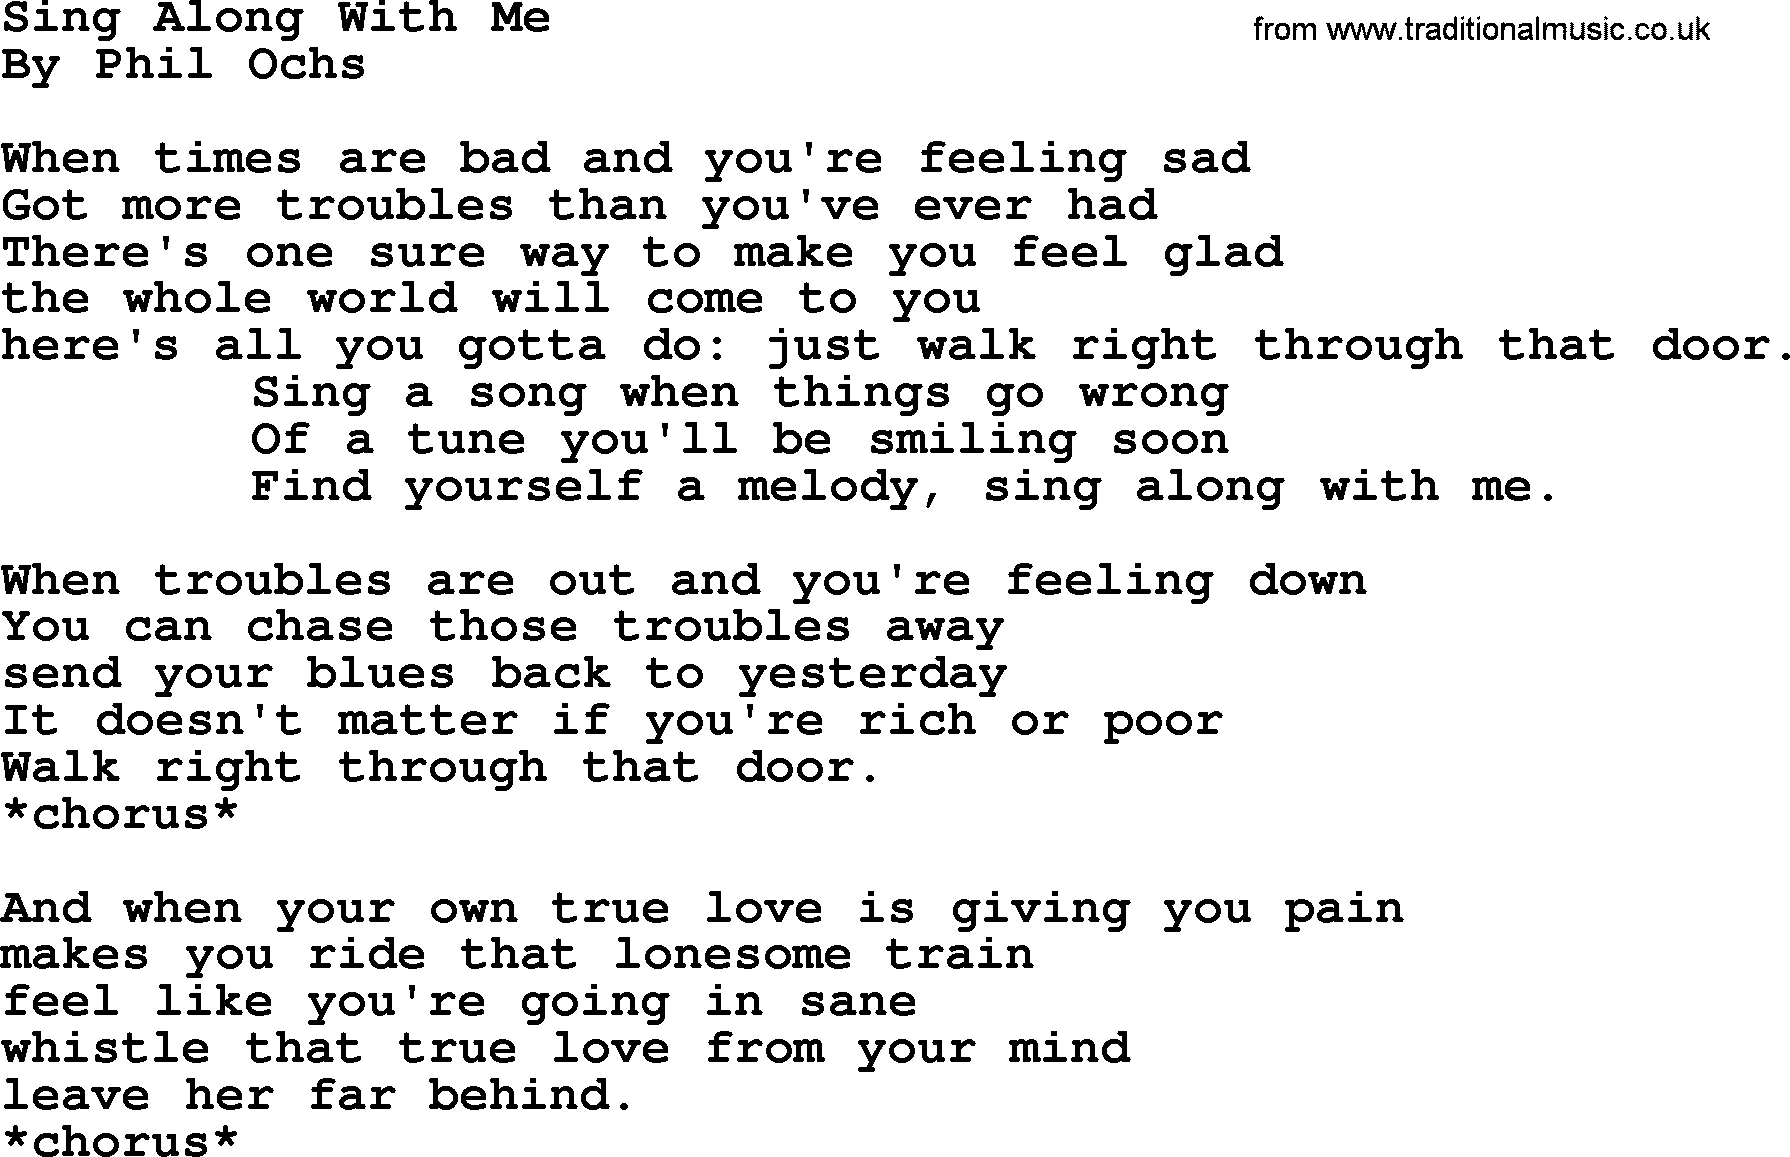 Phil Ochs song Sing Along With Me, lyrics